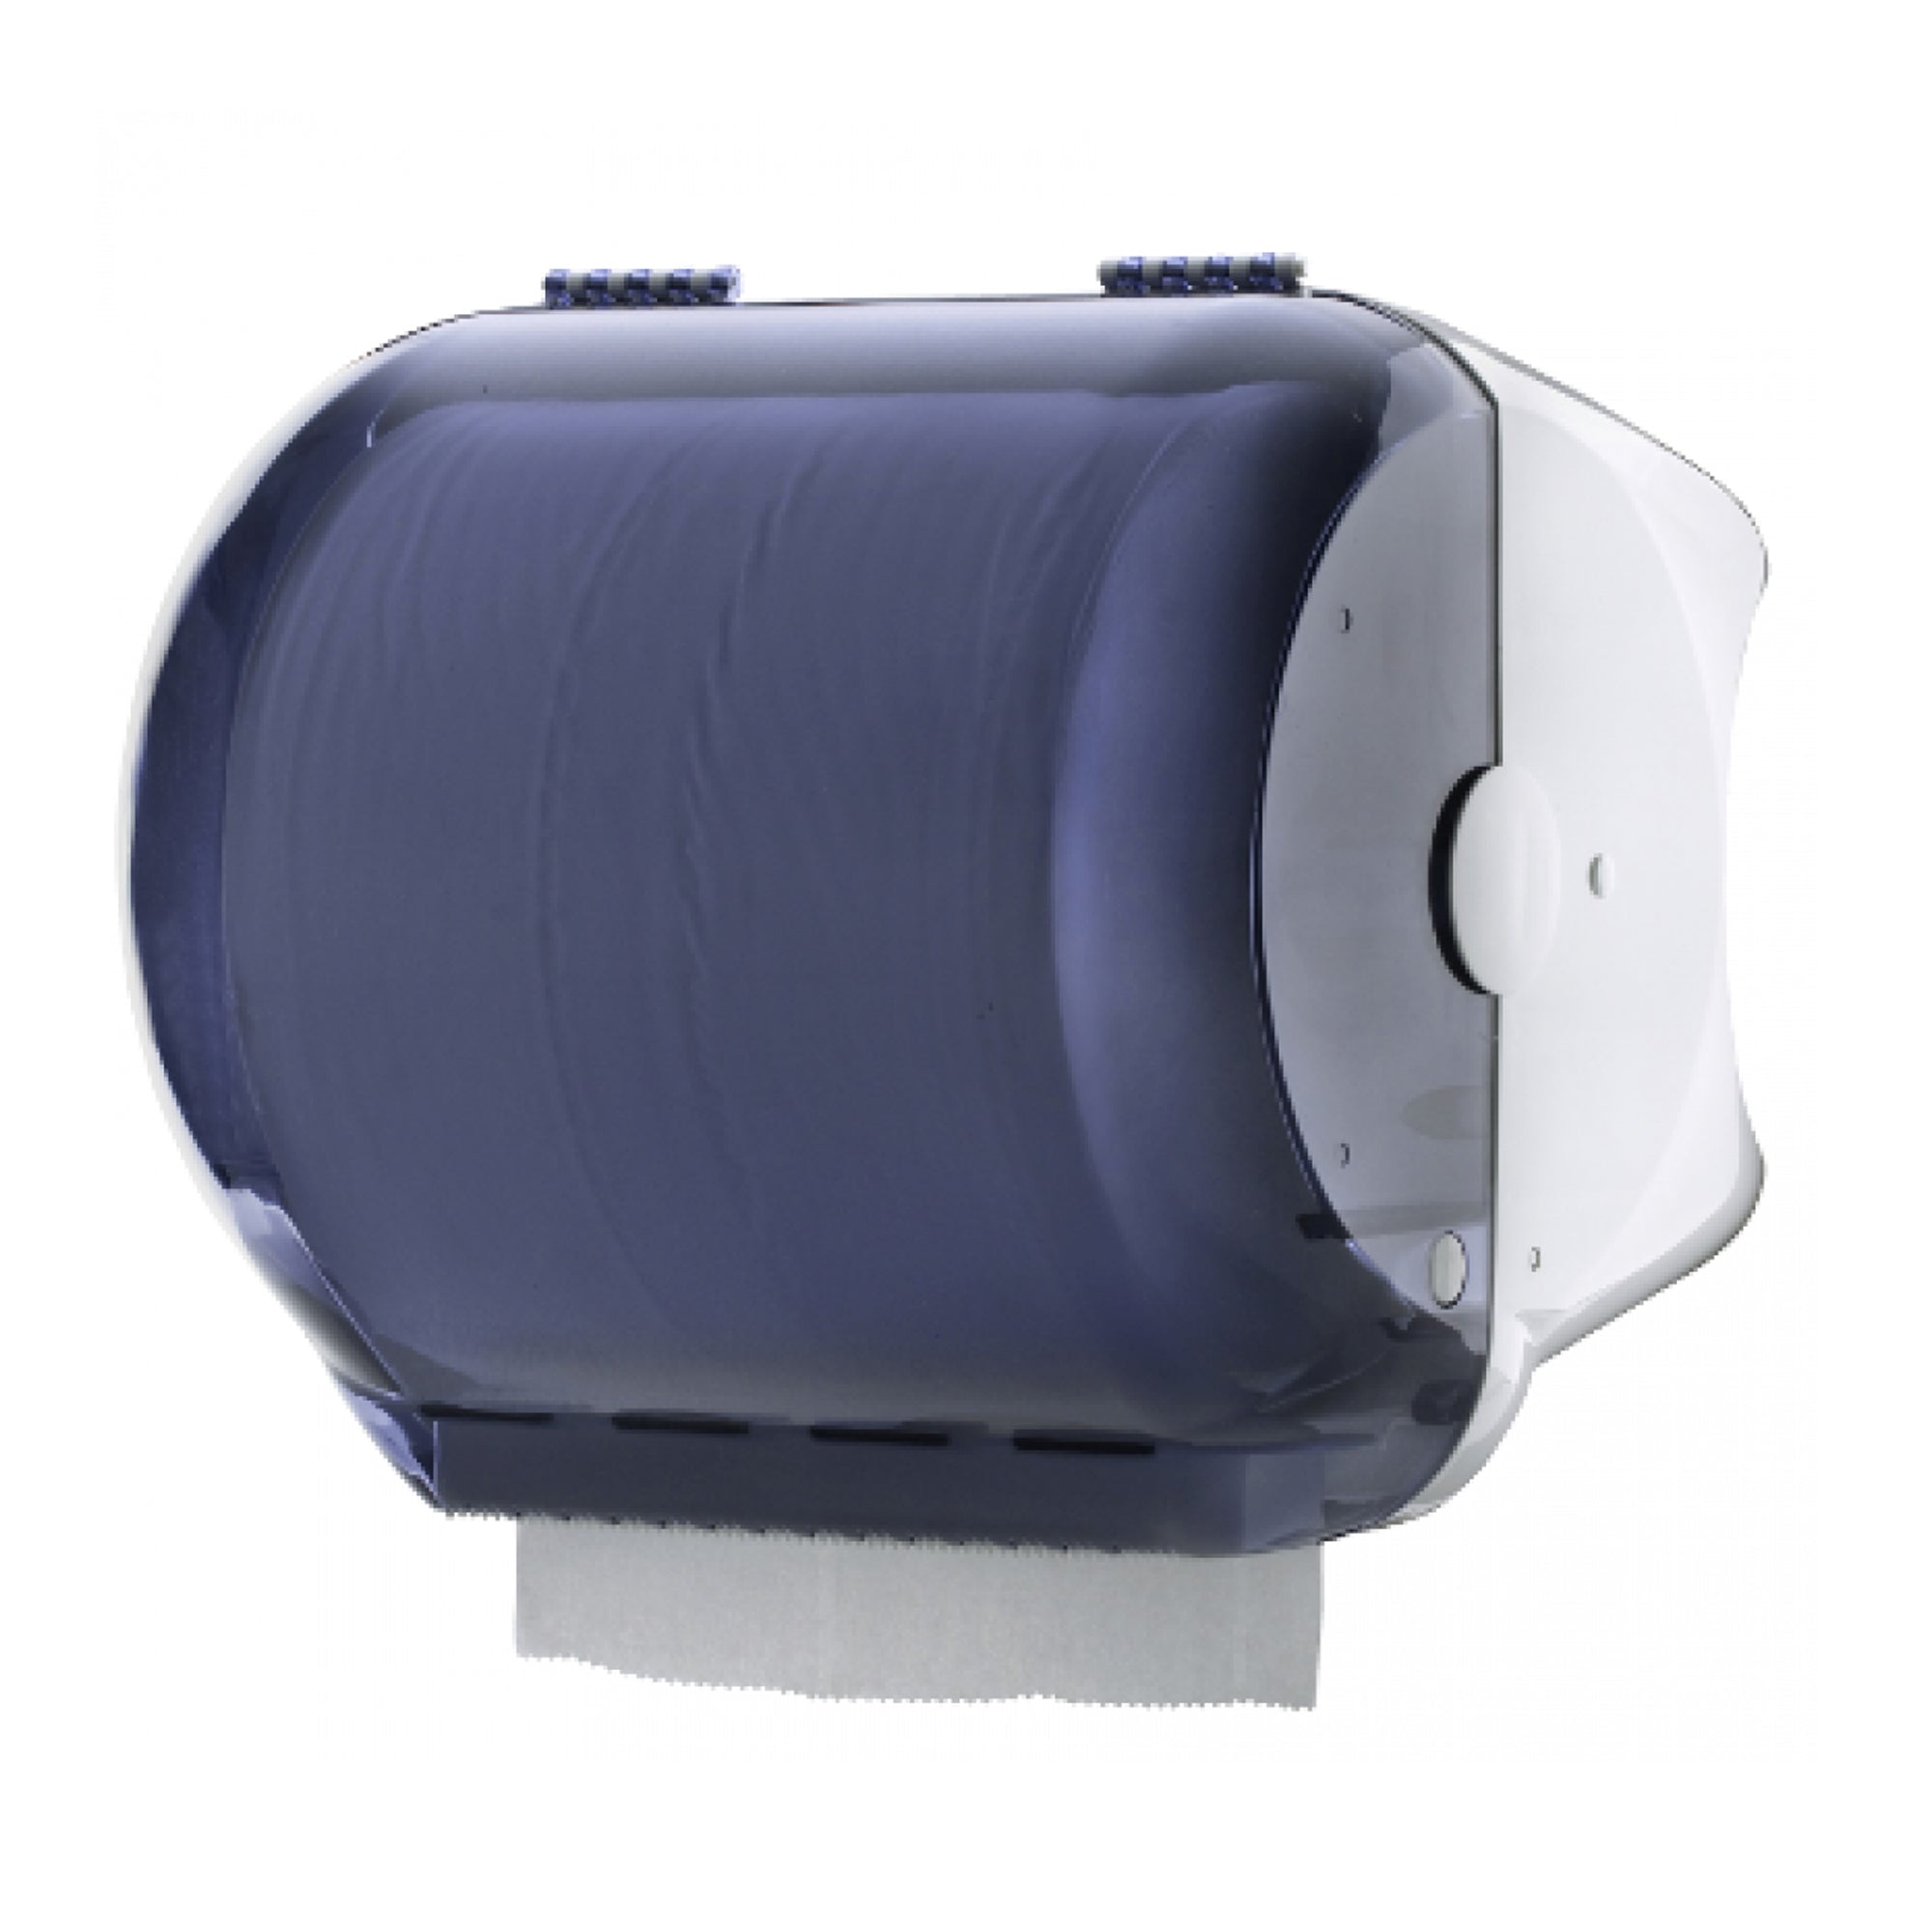 mar-plast-dispenser-banco-carenato-bobine-ind-wiperbox